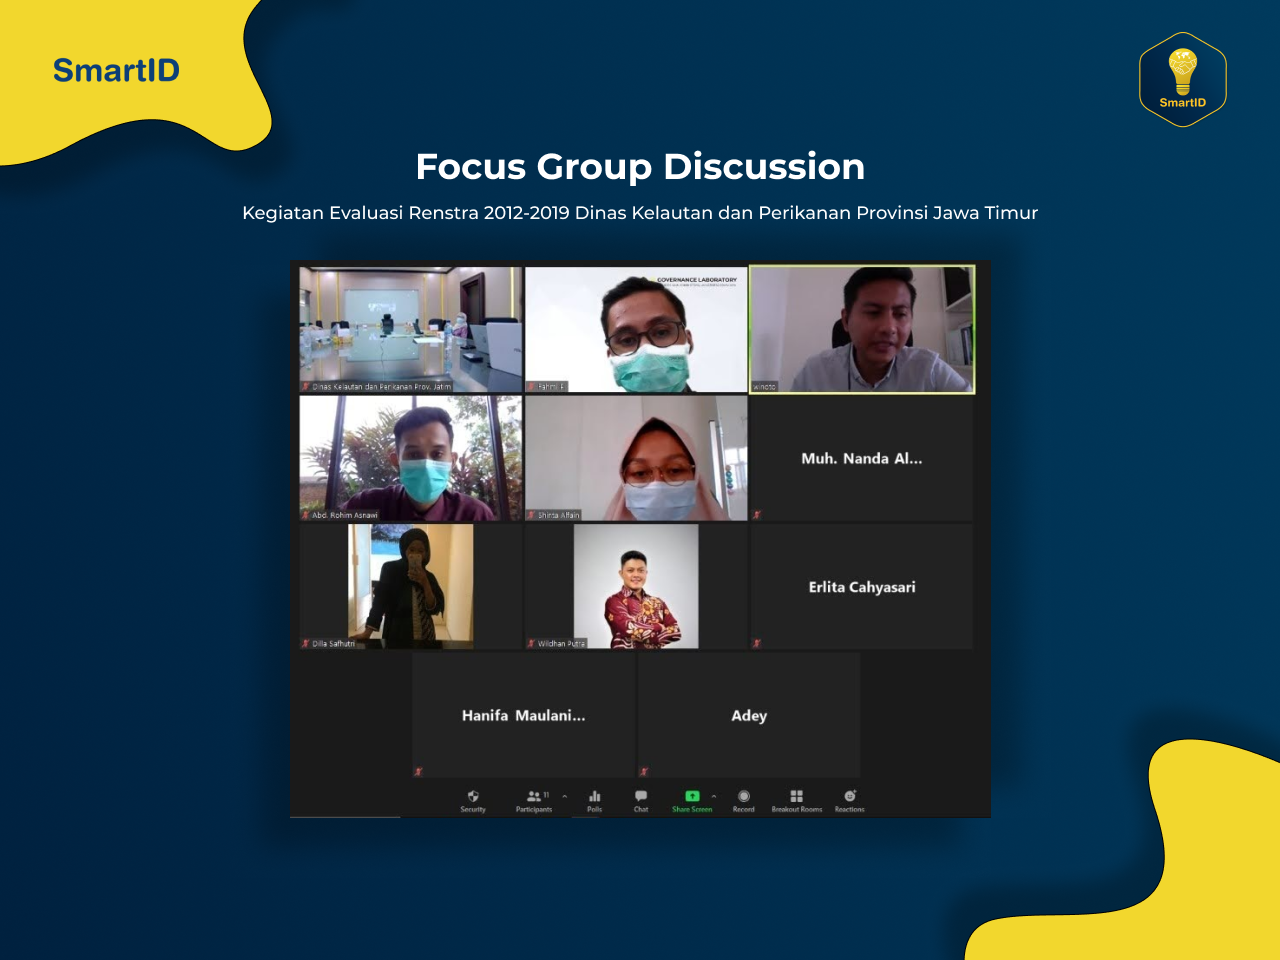 Focus Group Discussion Kegiatan Evaluasi Renstra 2014-2019 Dinas Kelautan dan Perikanan Provinsi Jawa Timur